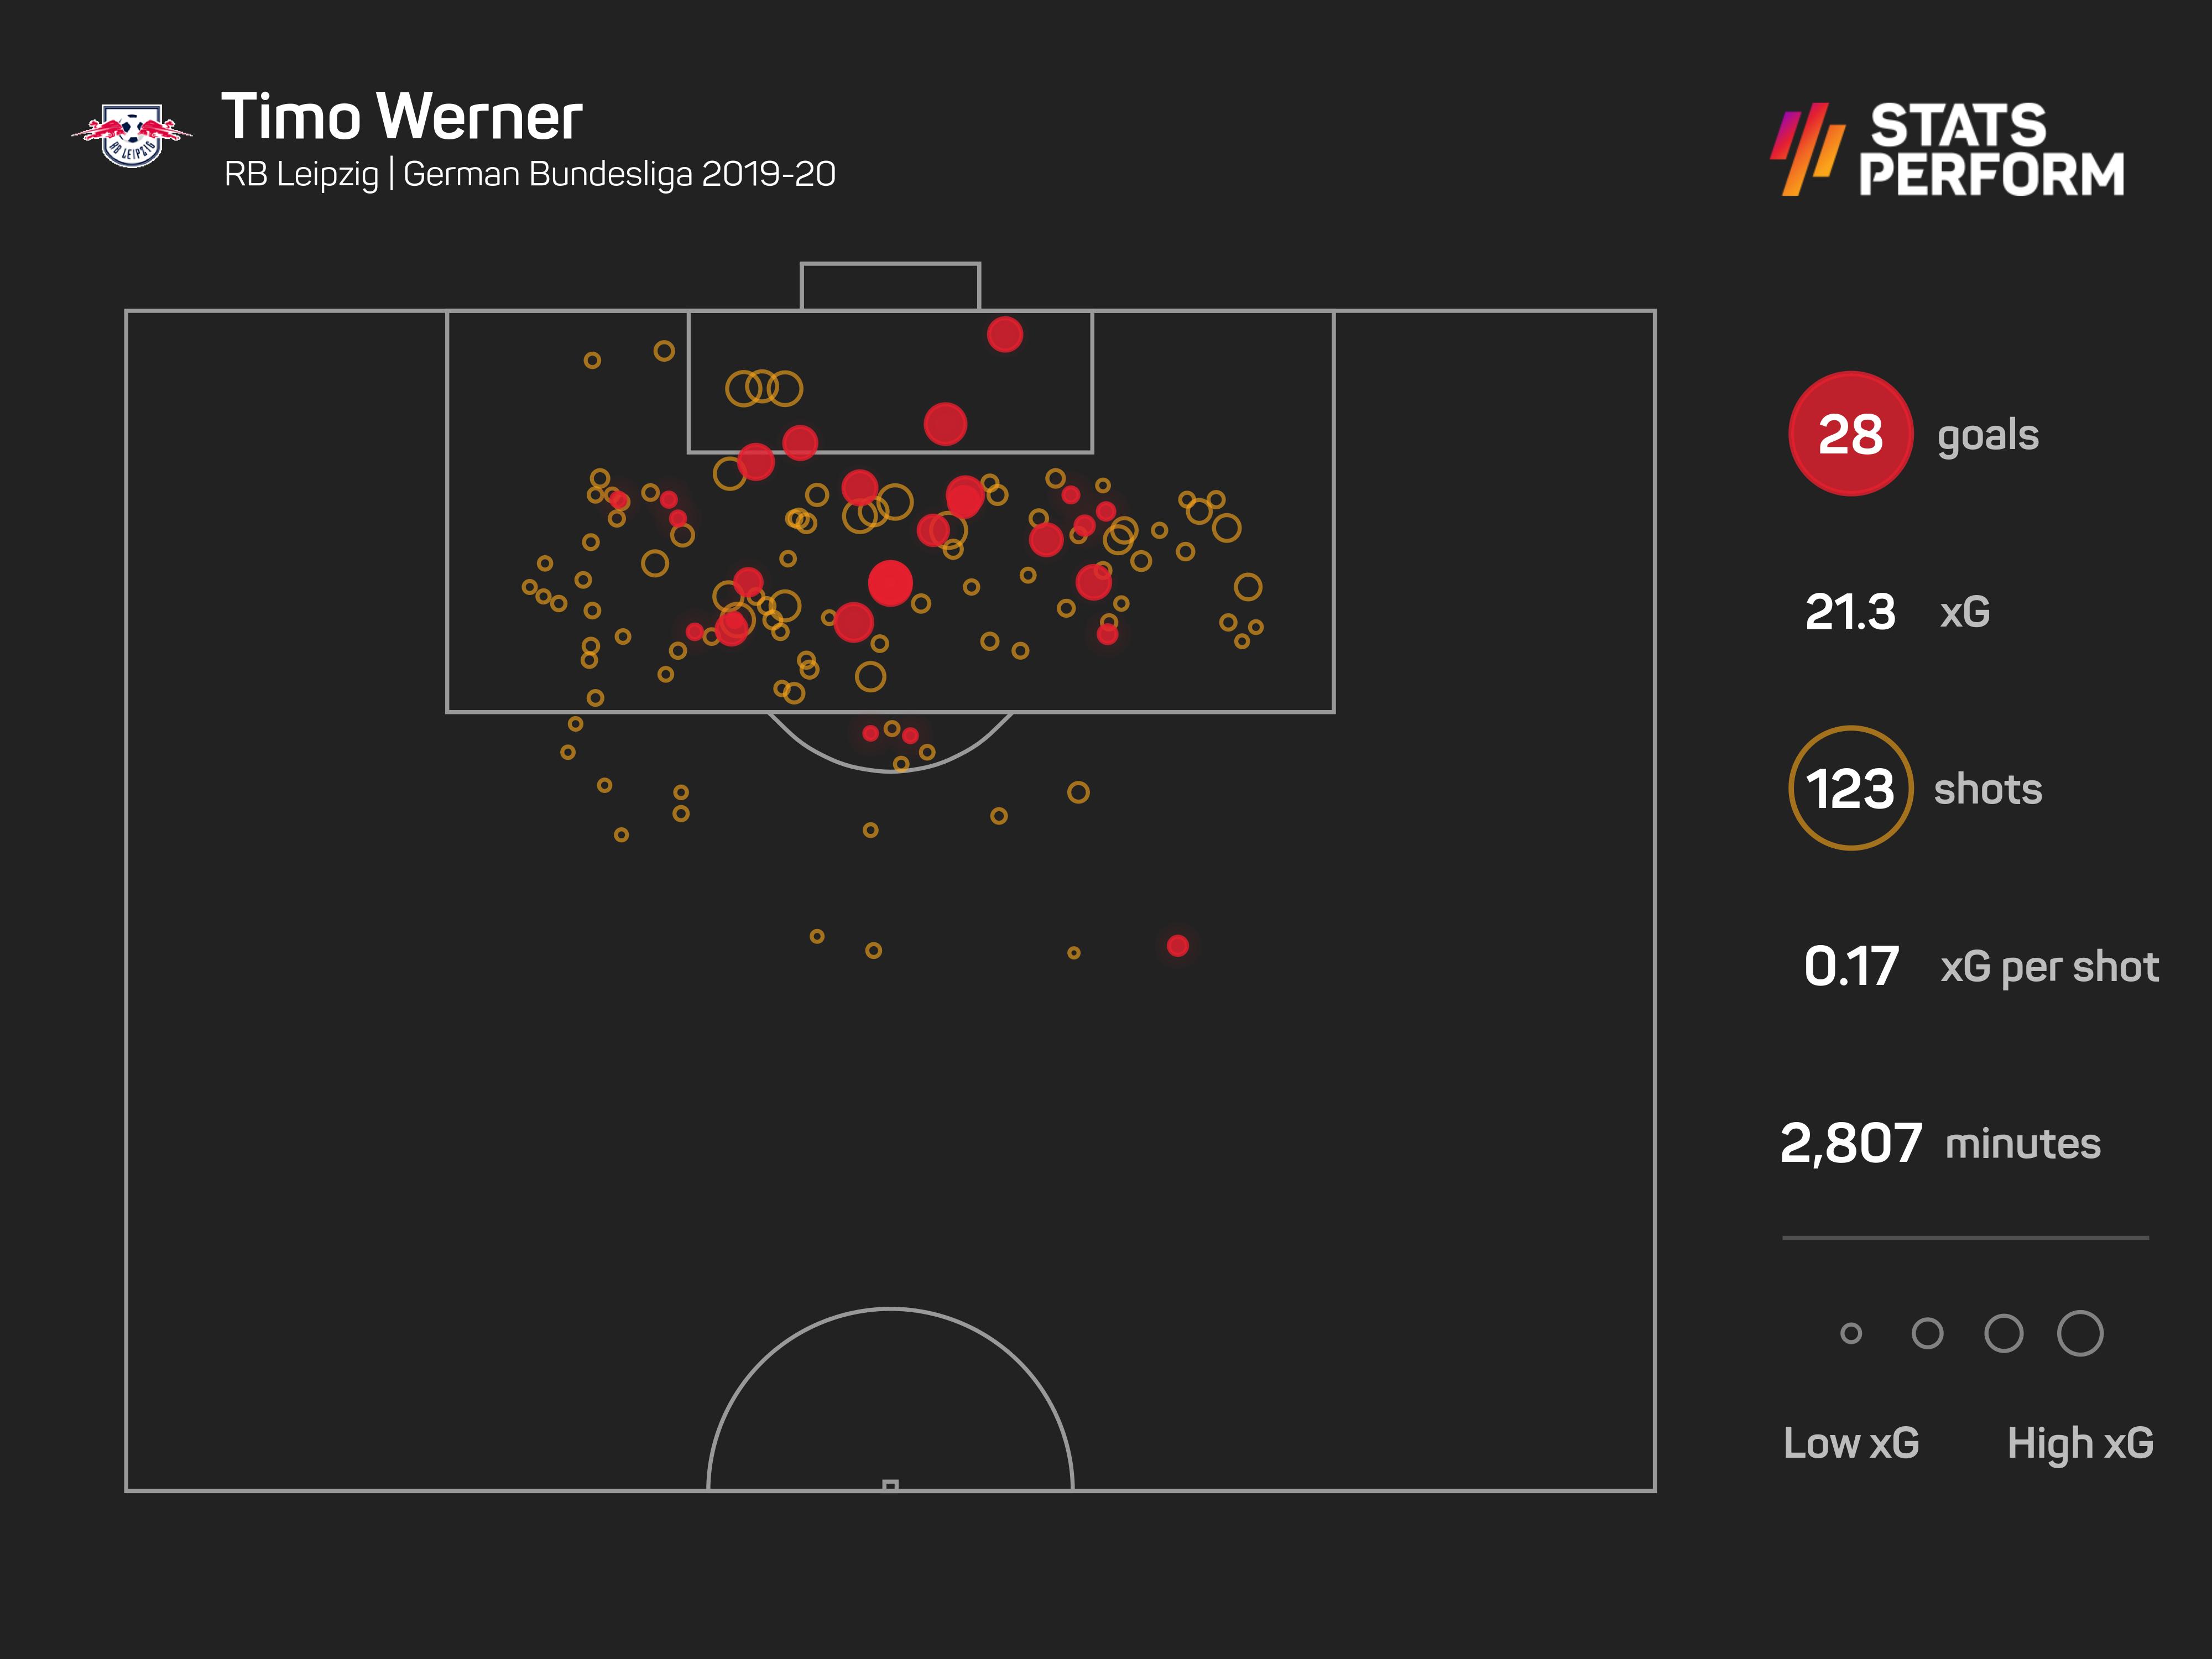 Timo Werner outperformed his xG in the 2019-20 Bundesliga season